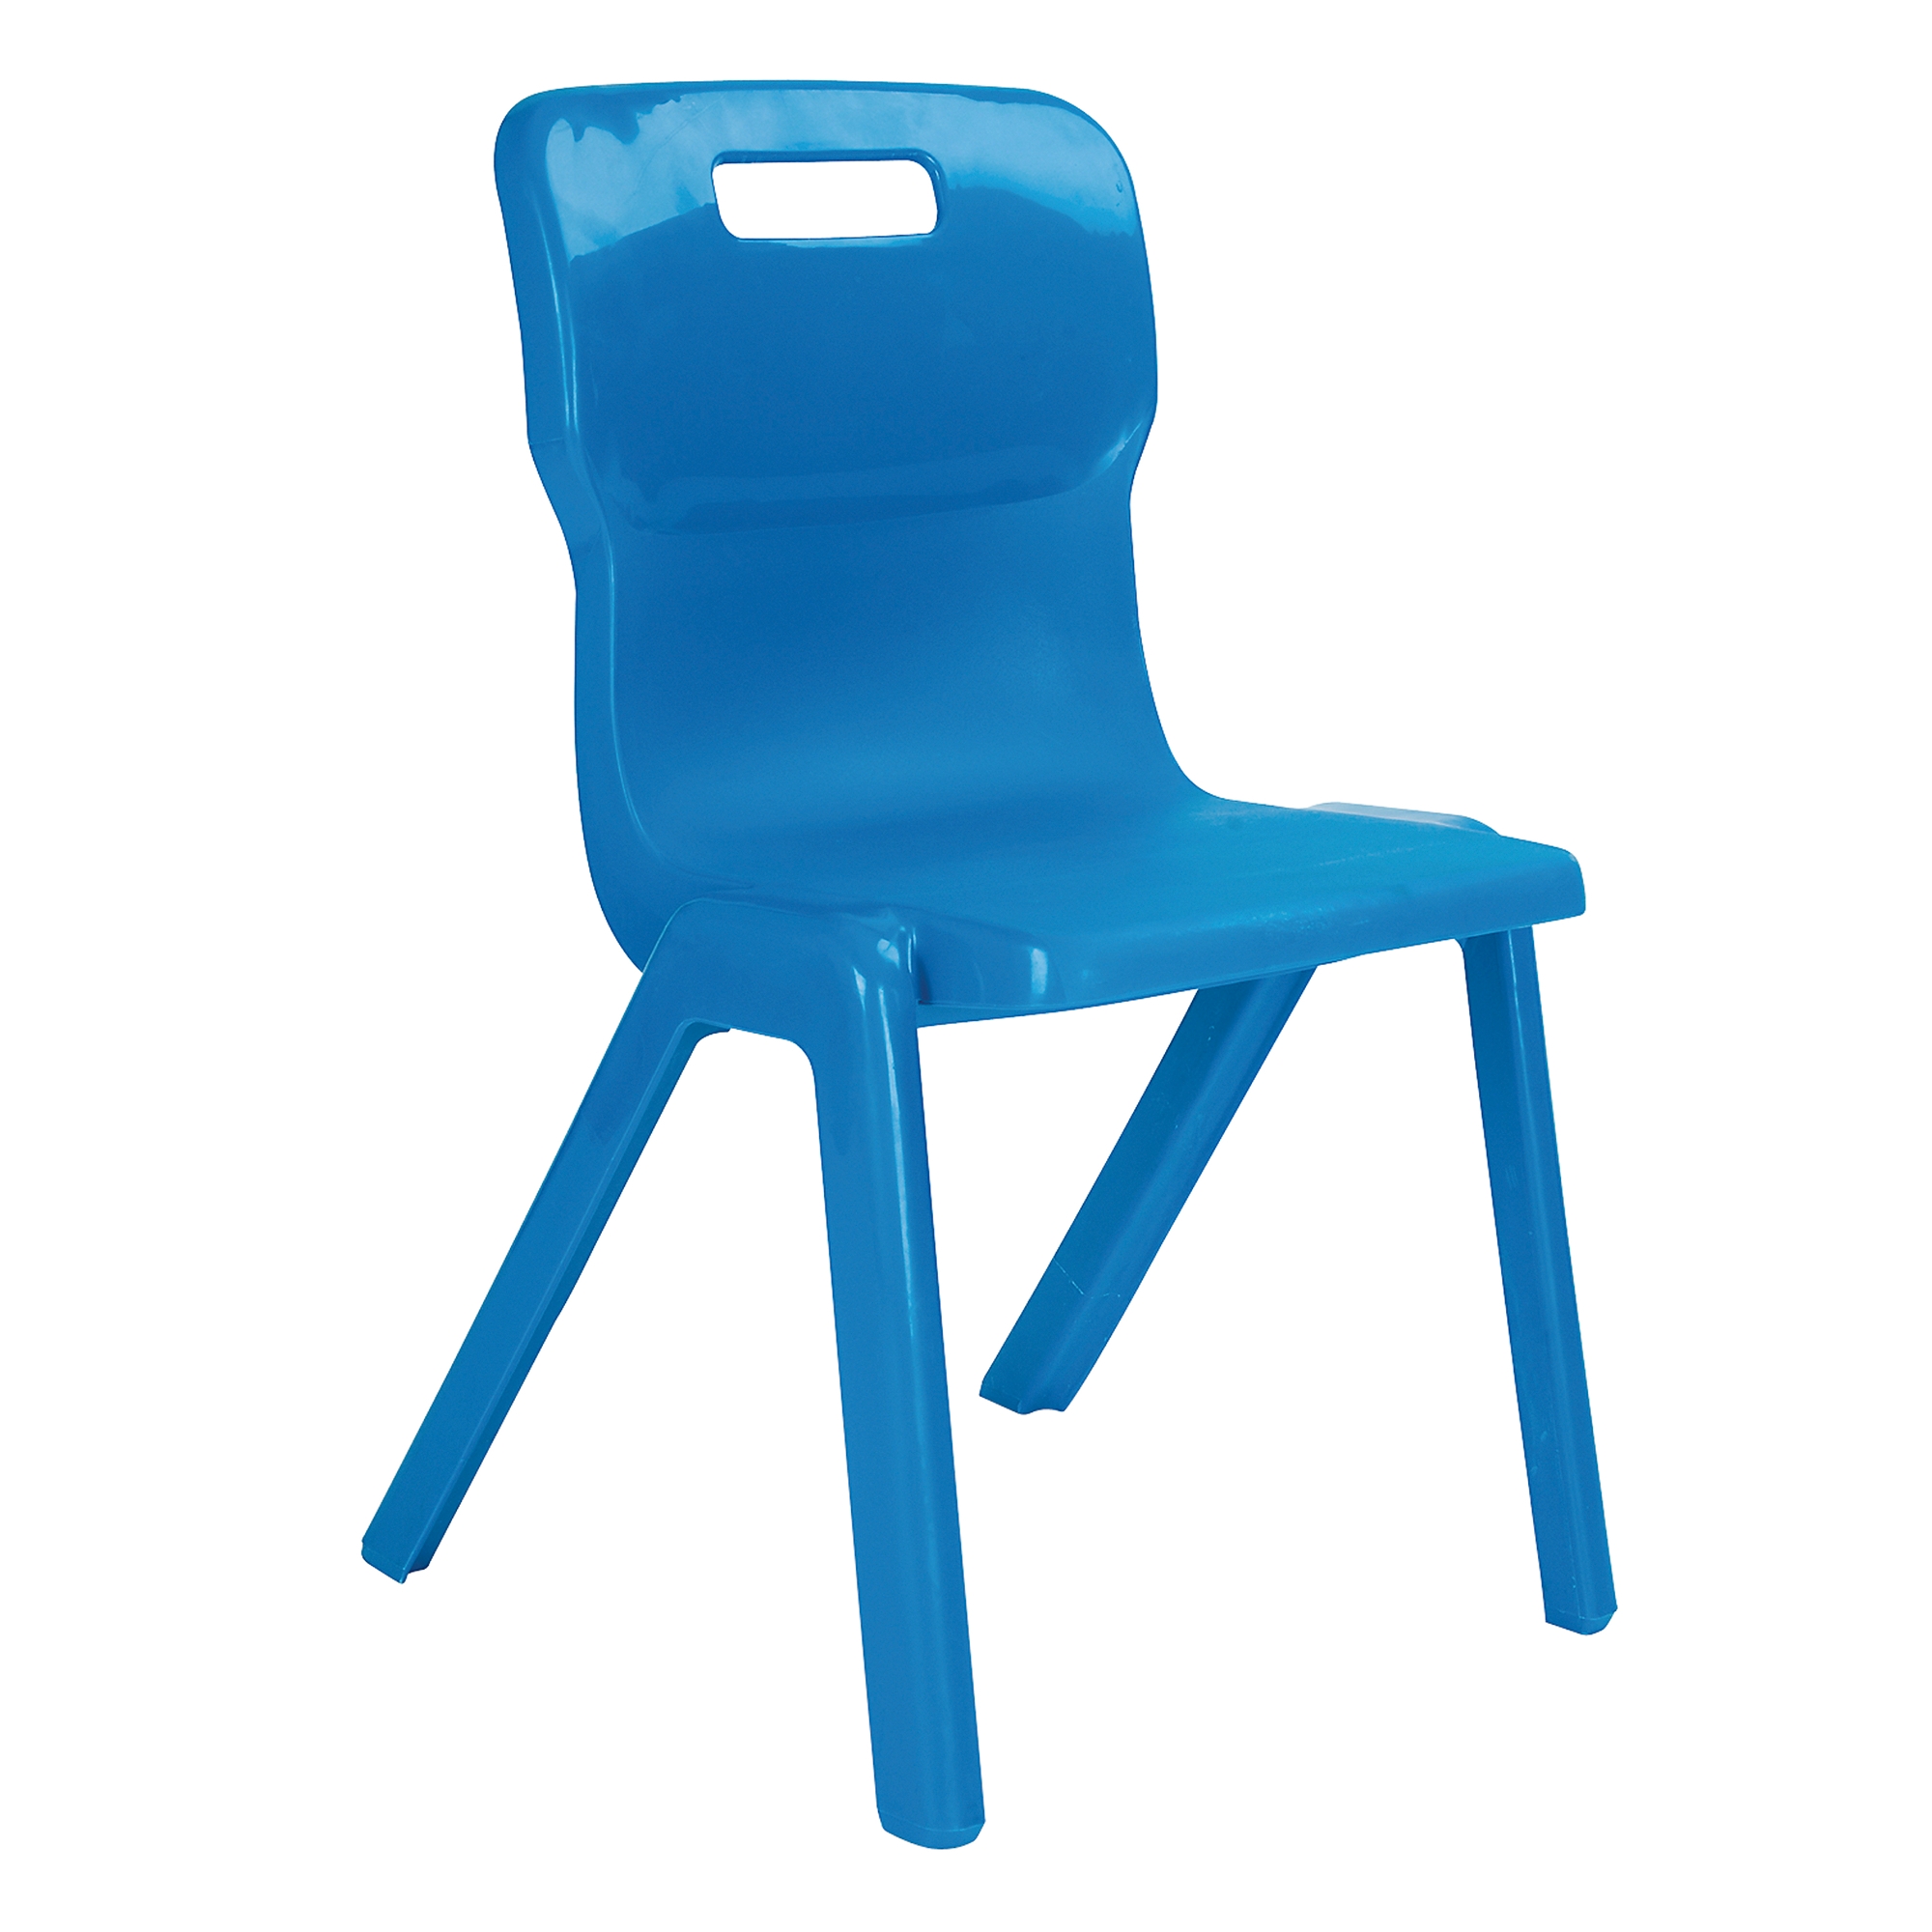 One Piece Titan Chair - Size 3 Ages 6-8 Blue